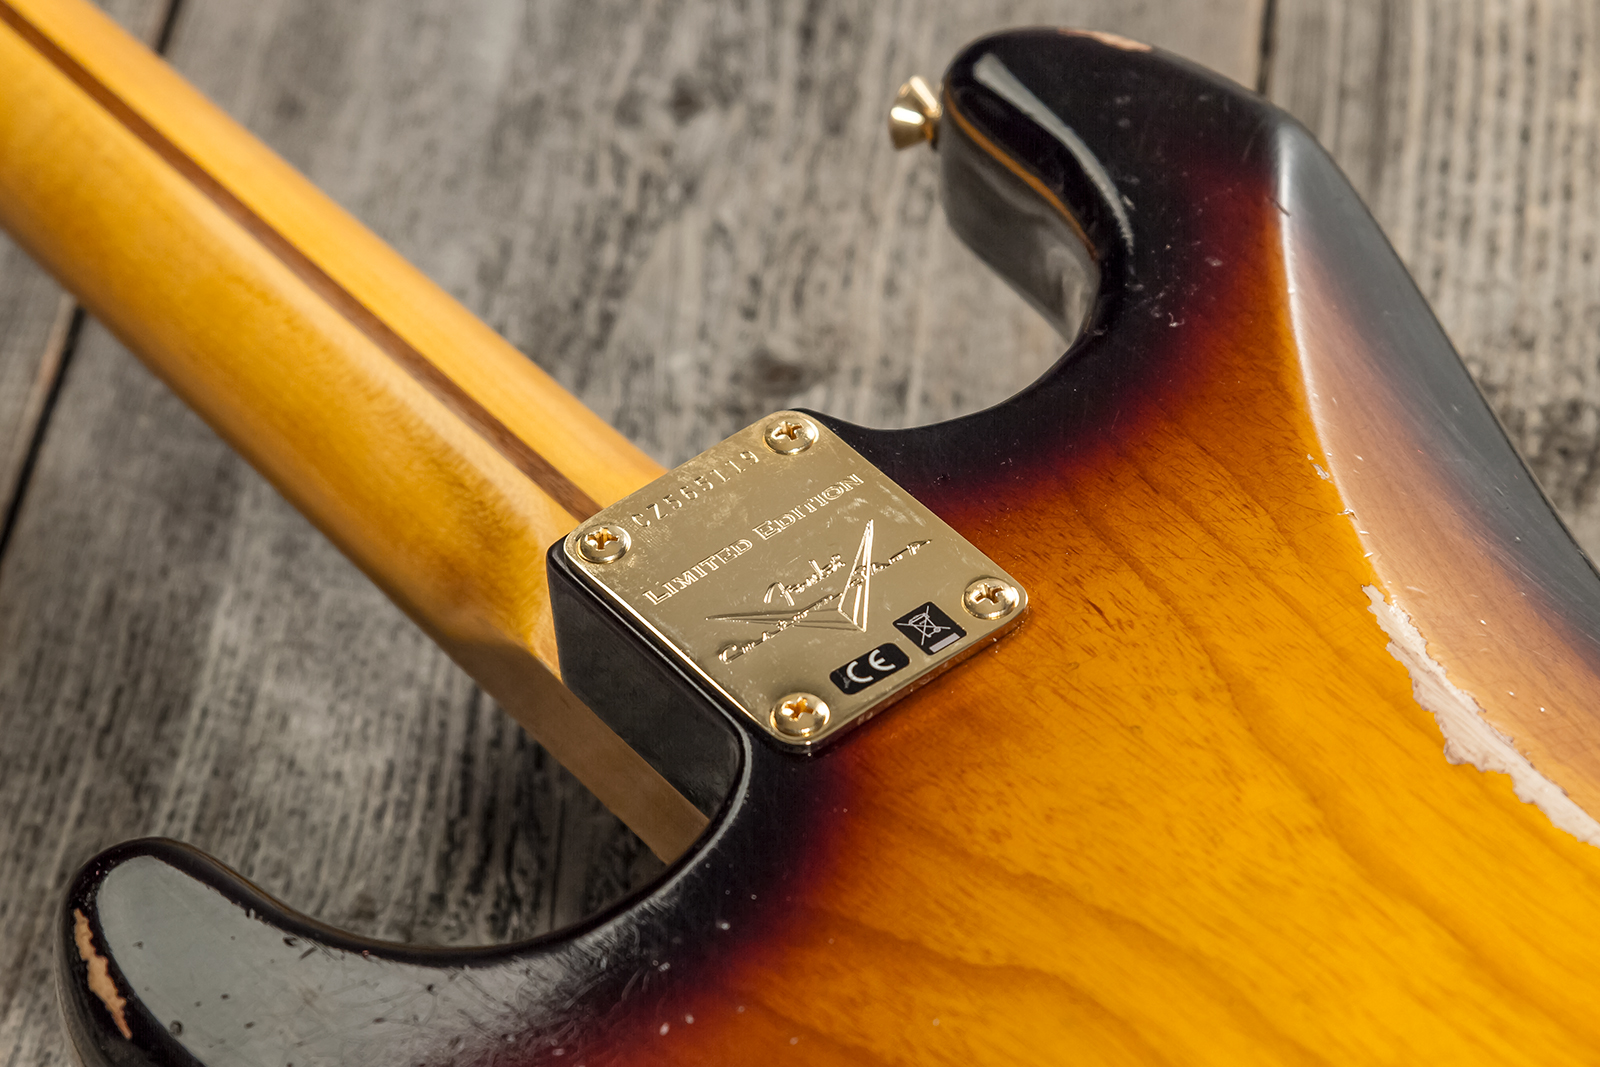 Fender Custom Shop Strat 1956 Hardtail Gold Hardware 3s Ht Mn #cz565119 - Relic Faded 2-color Sunburst - Guitarra eléctrica con forma de str. - Variat